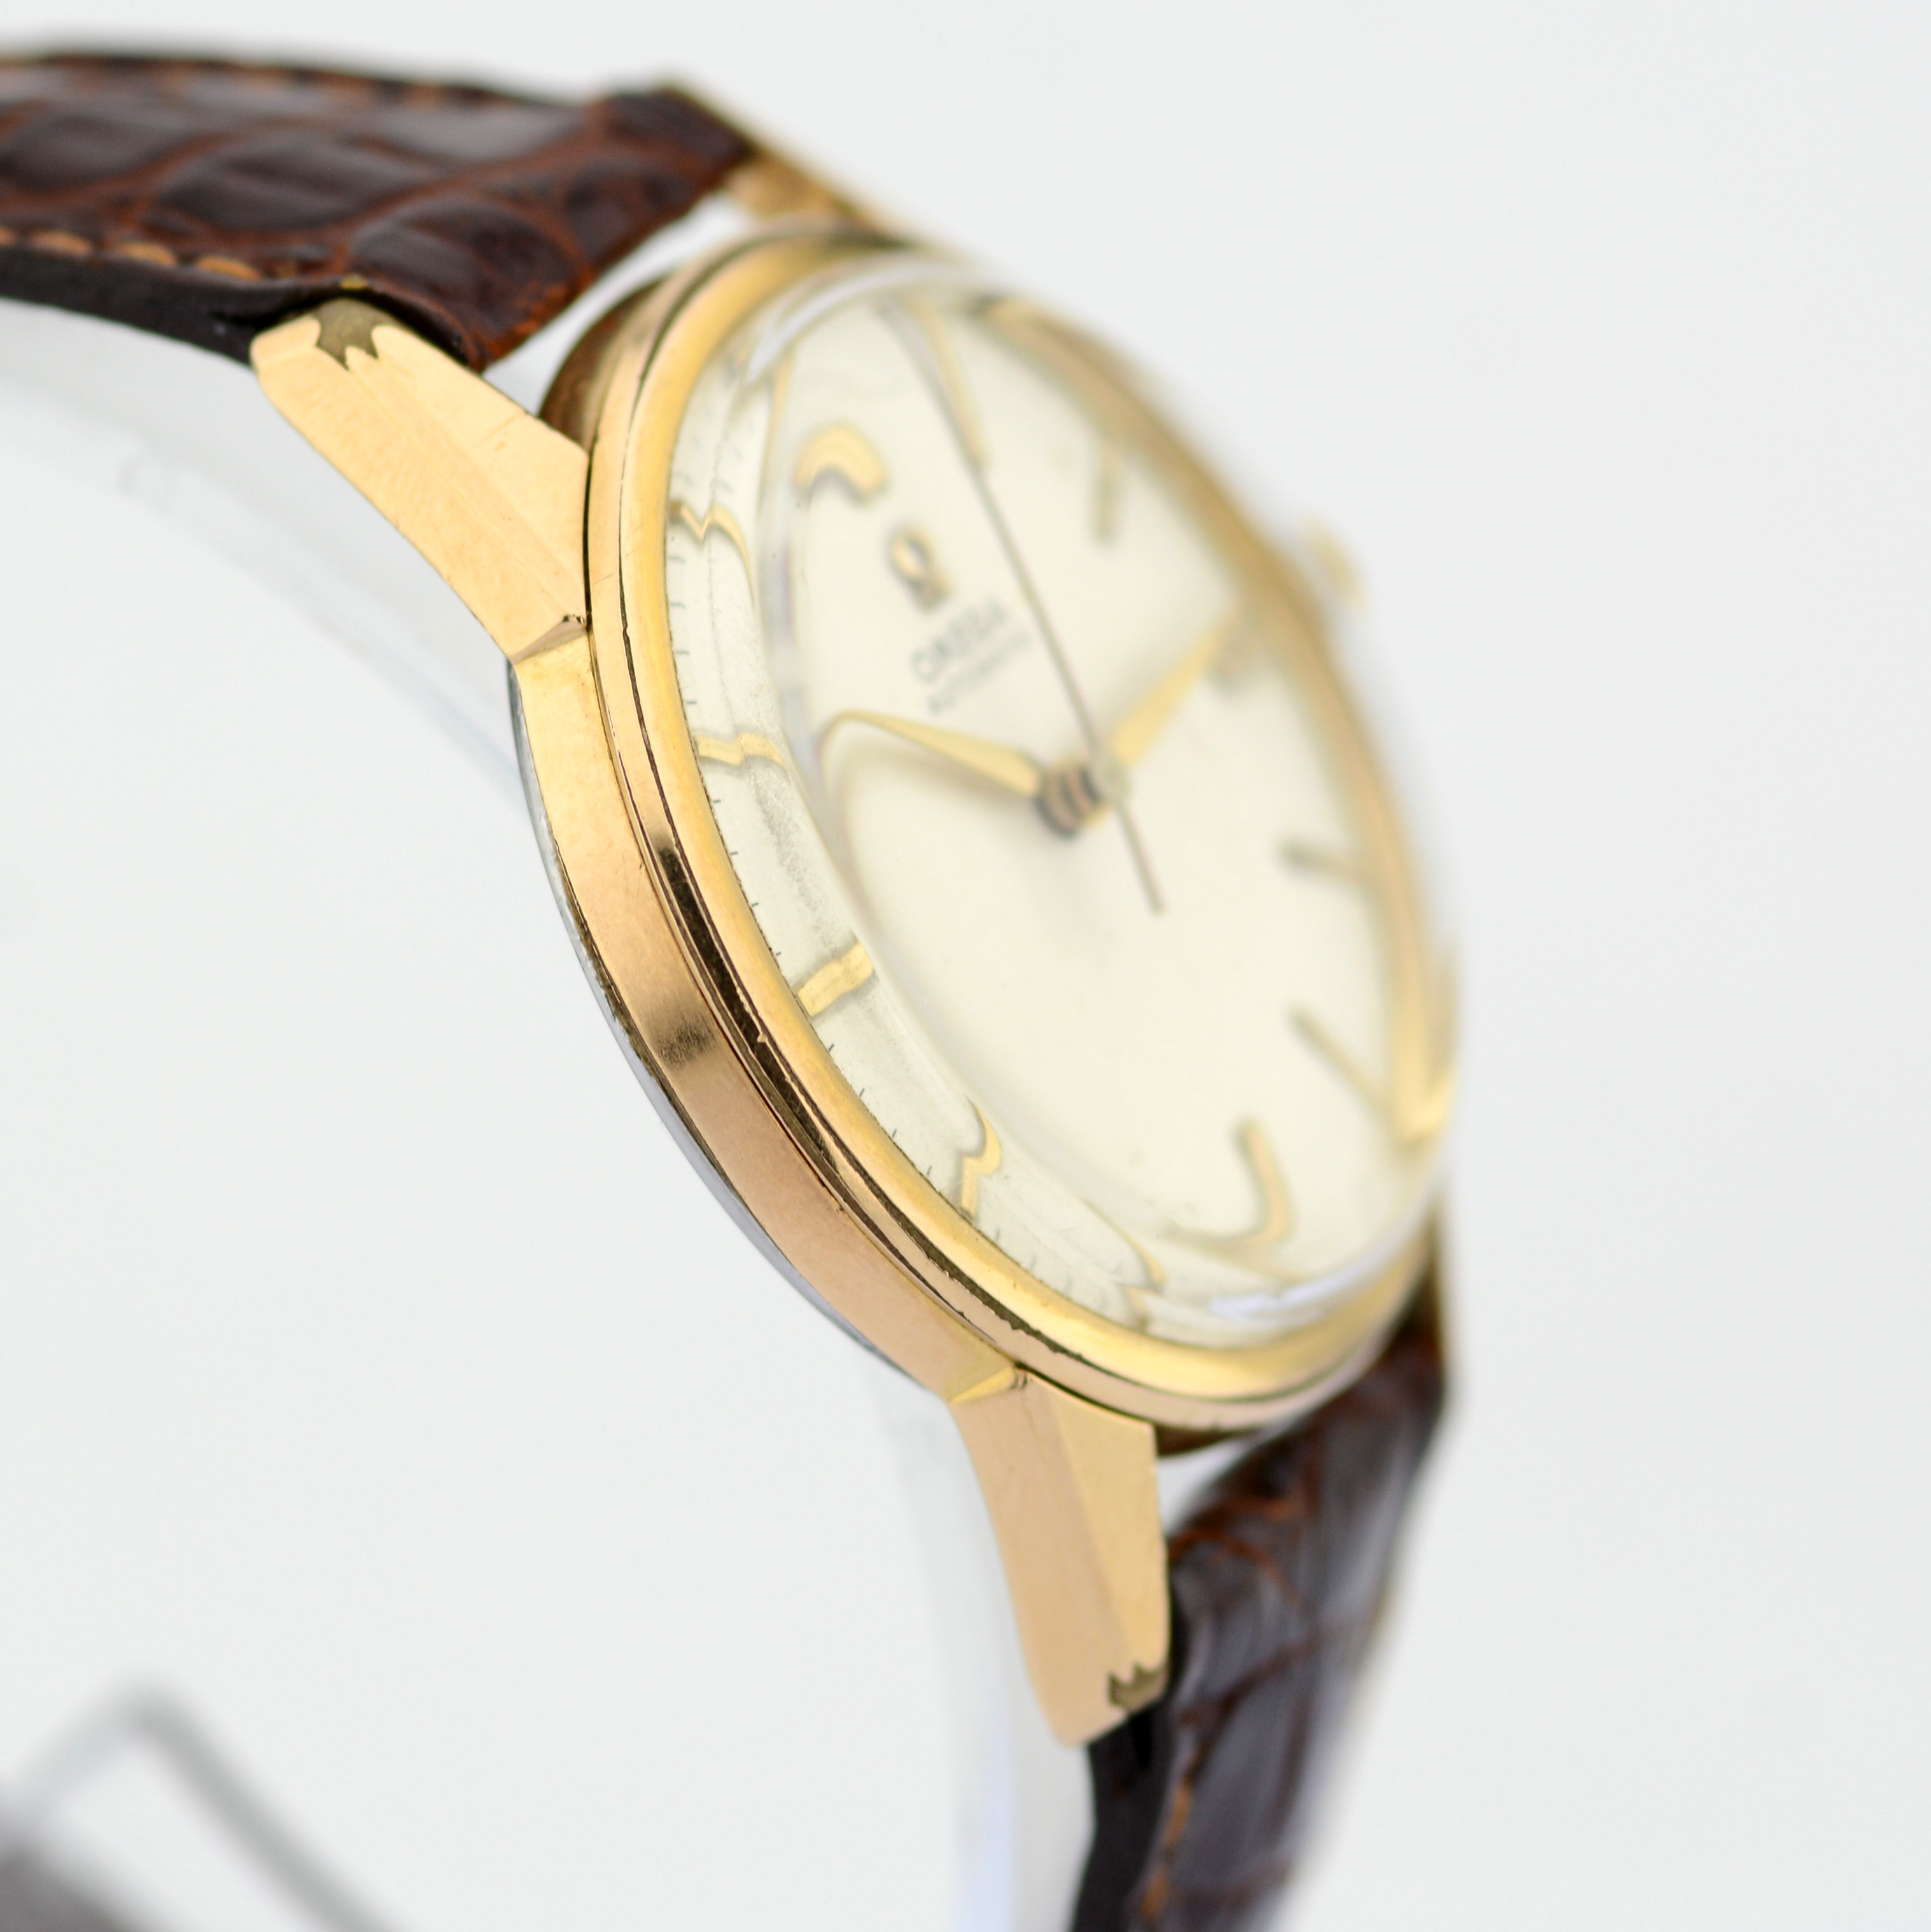 Omega / Vintage Automatic - Gentlmen's Gold/Steel Wrist Watch - Image 3 of 8